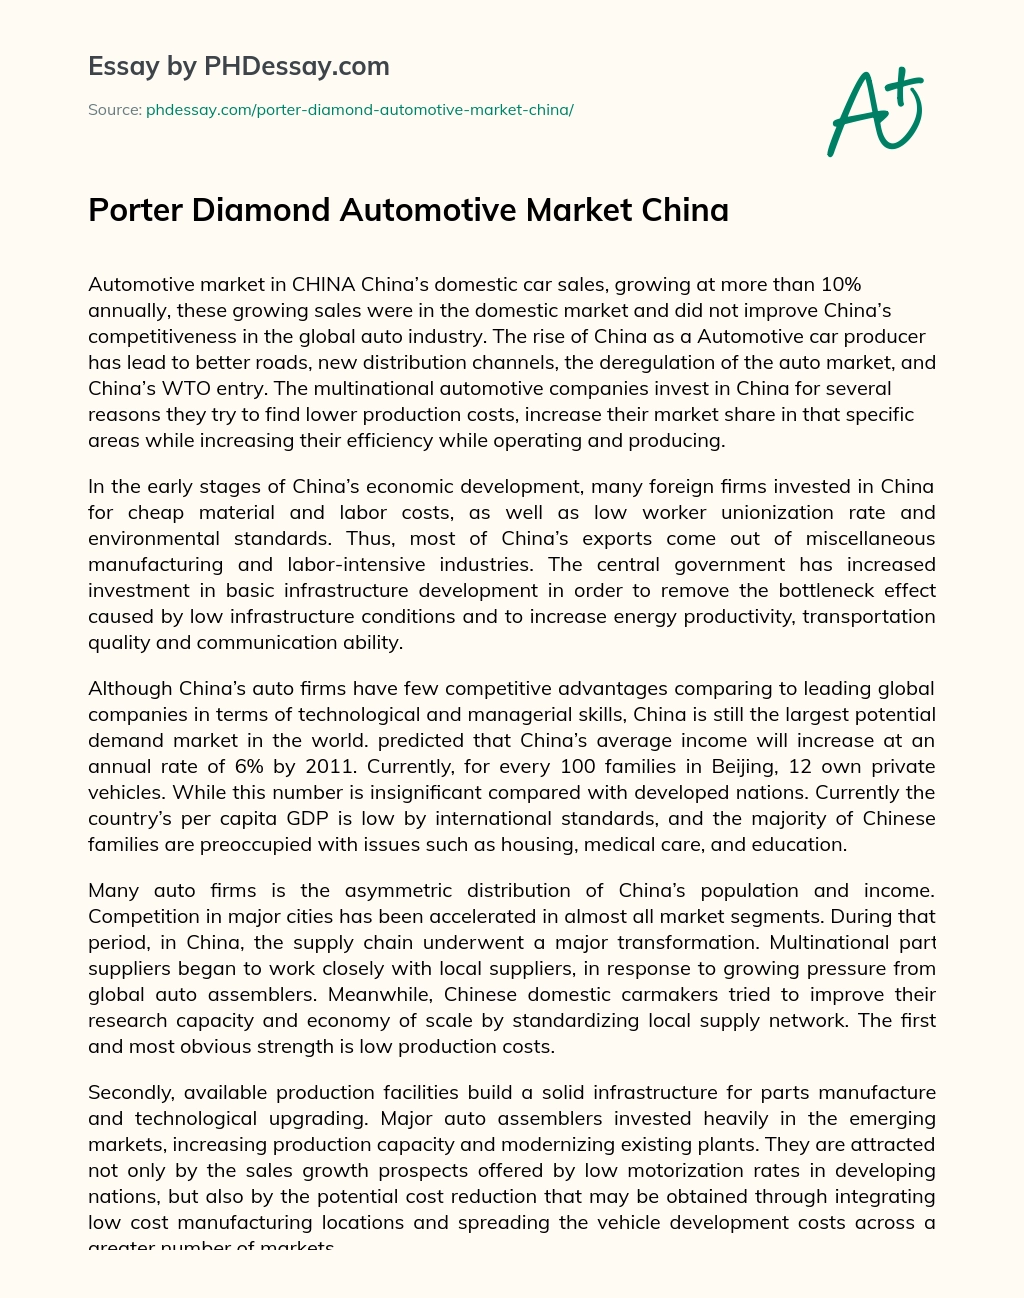 Porter Diamond Automotive Market China essay